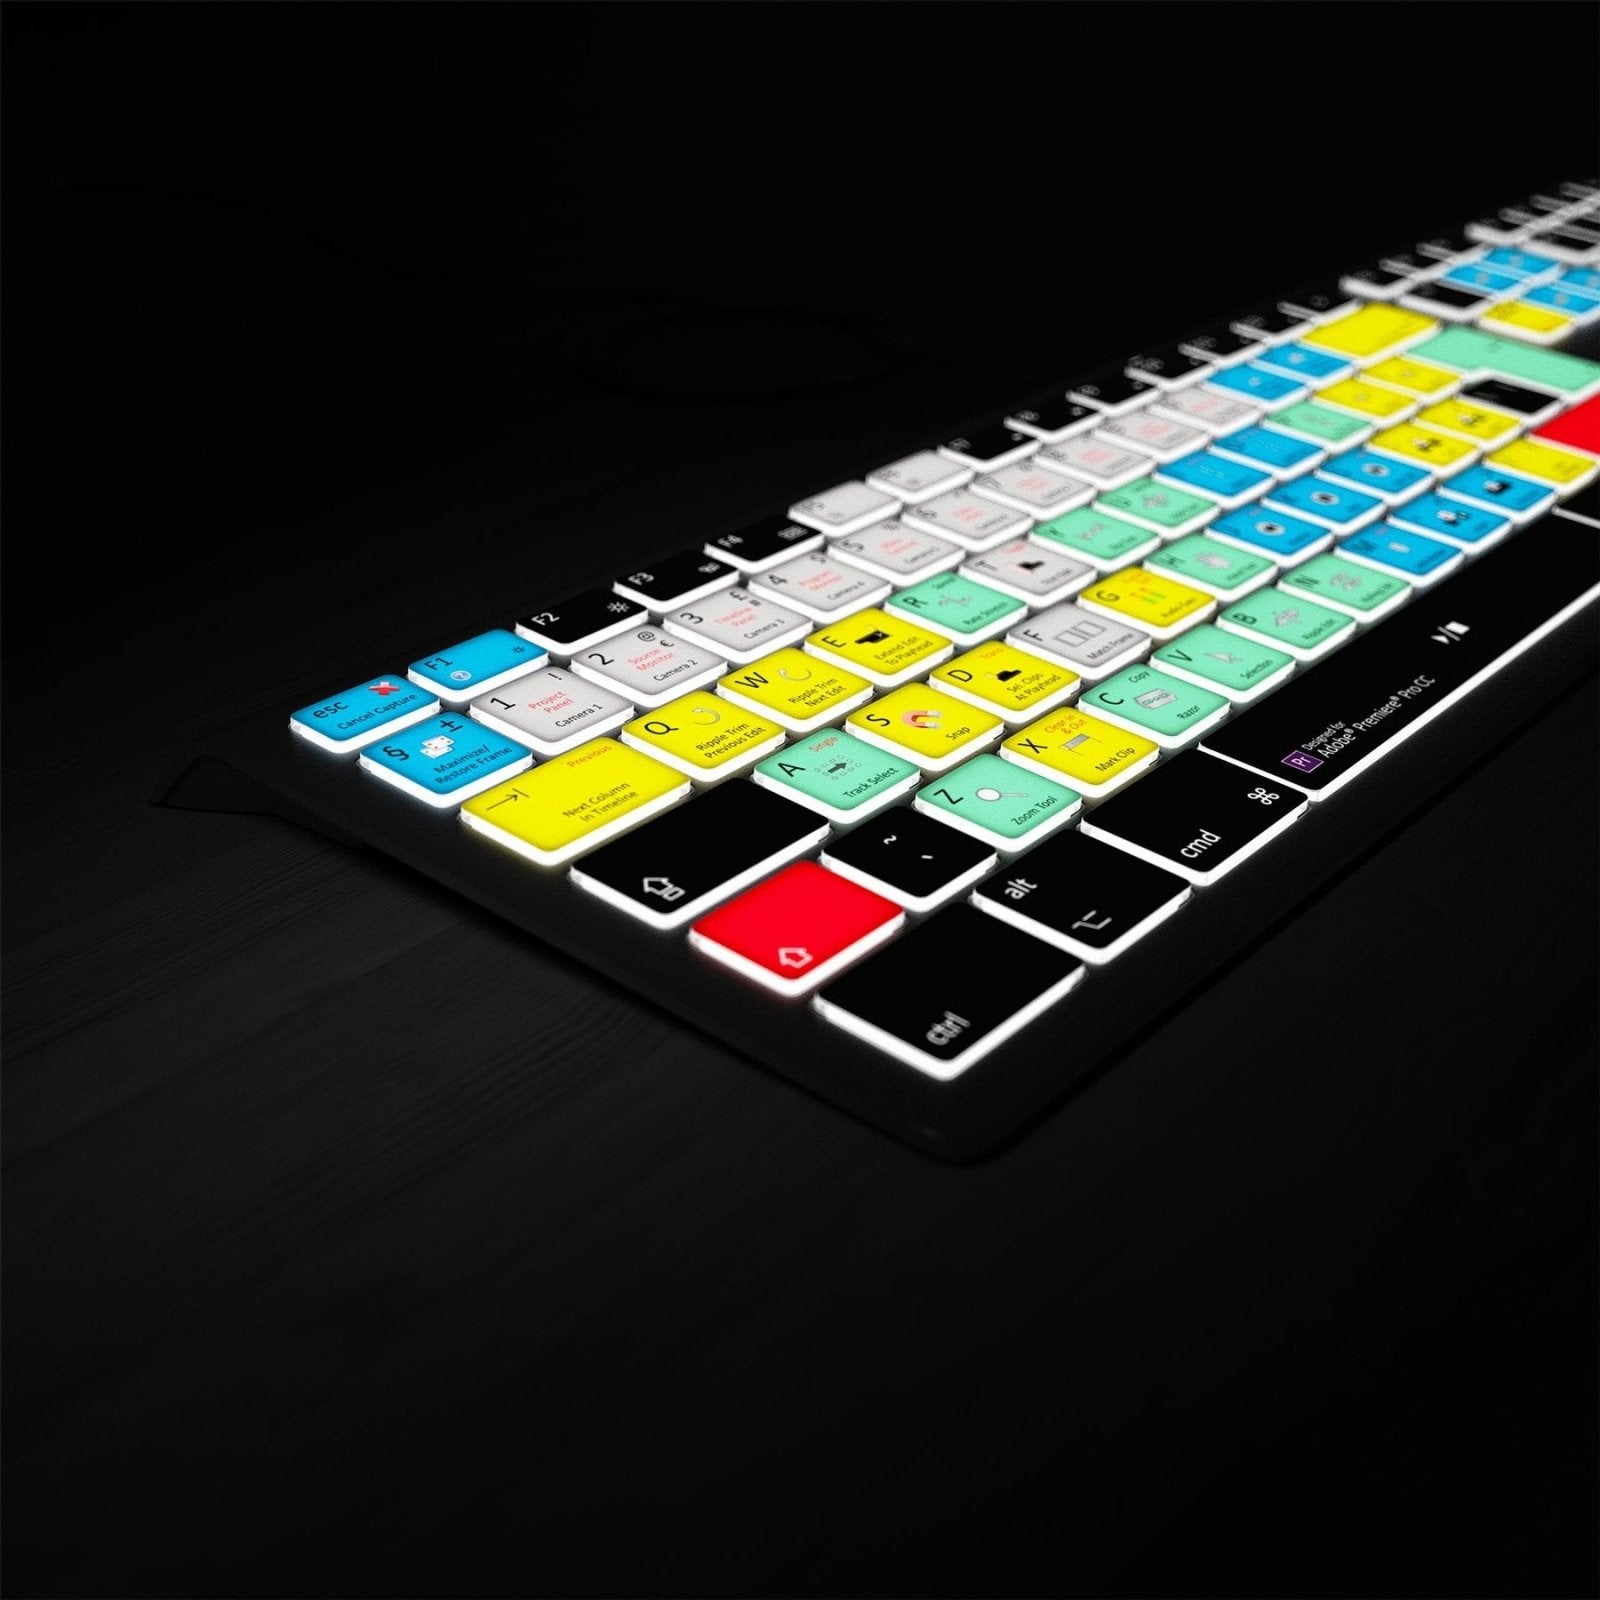 Adobe Premiere Pro CC Keyboard - Backlit - For Mac or PC - Editors Keys